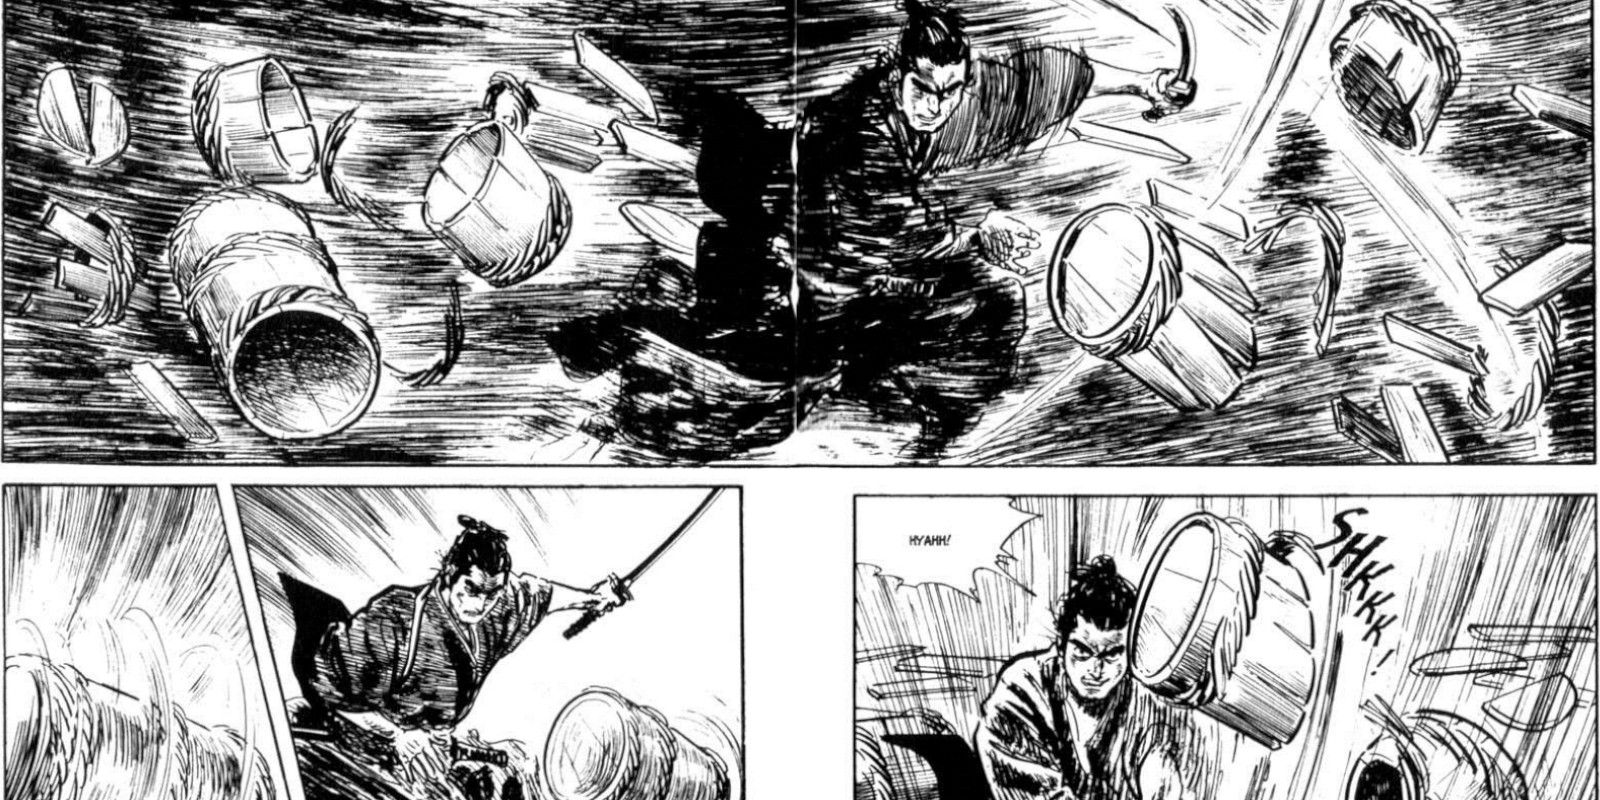 Yamada Asaemon slicing through some barrels in Samurai Executioner 